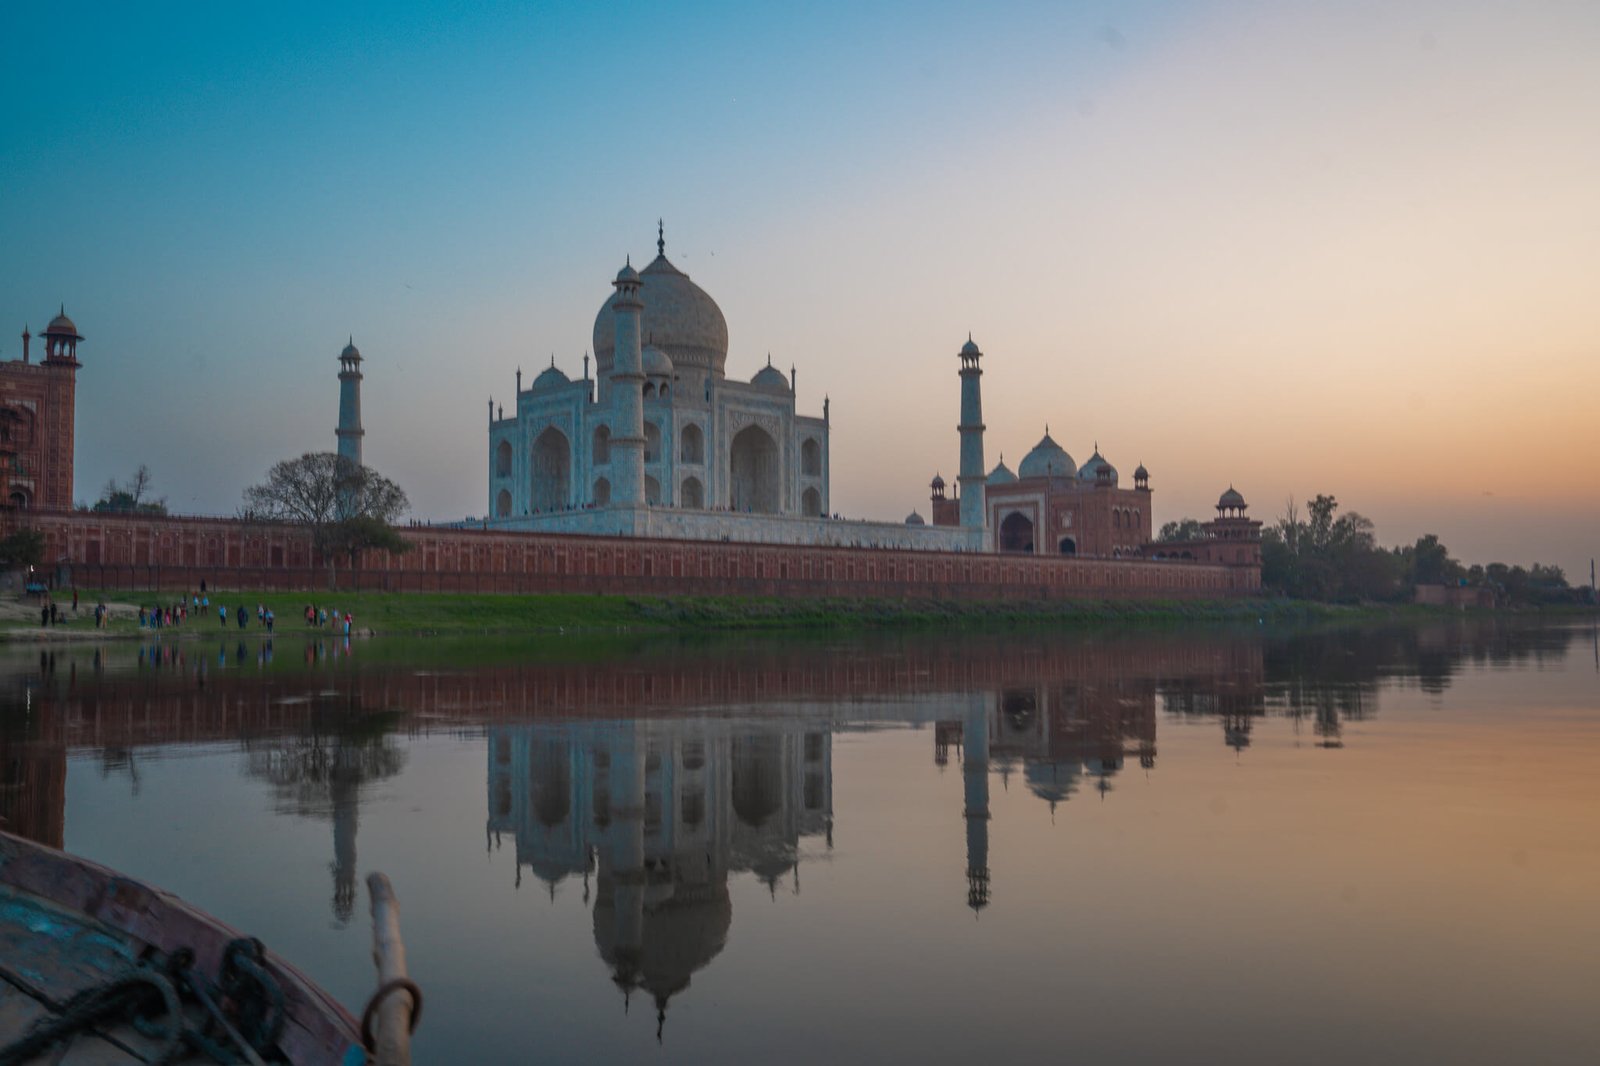 sunset boat ride outside the Taj Mahal in India 